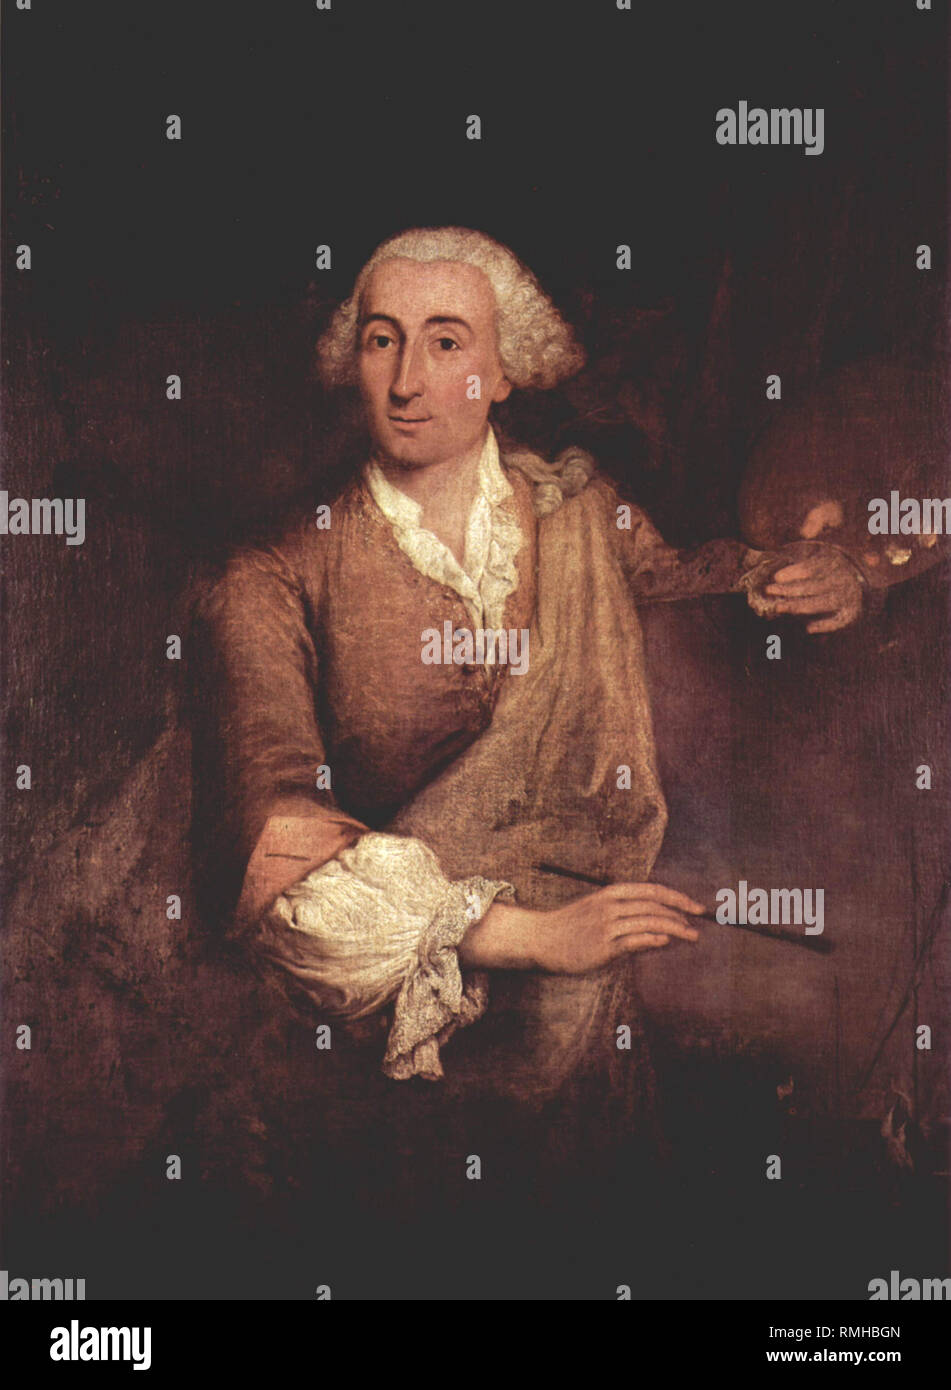 Lazzaro Francesco Guardi (1712 - 1793), pintor italiano artista. Francesco Guardi retratado por Pietro Longhi Foto de stock